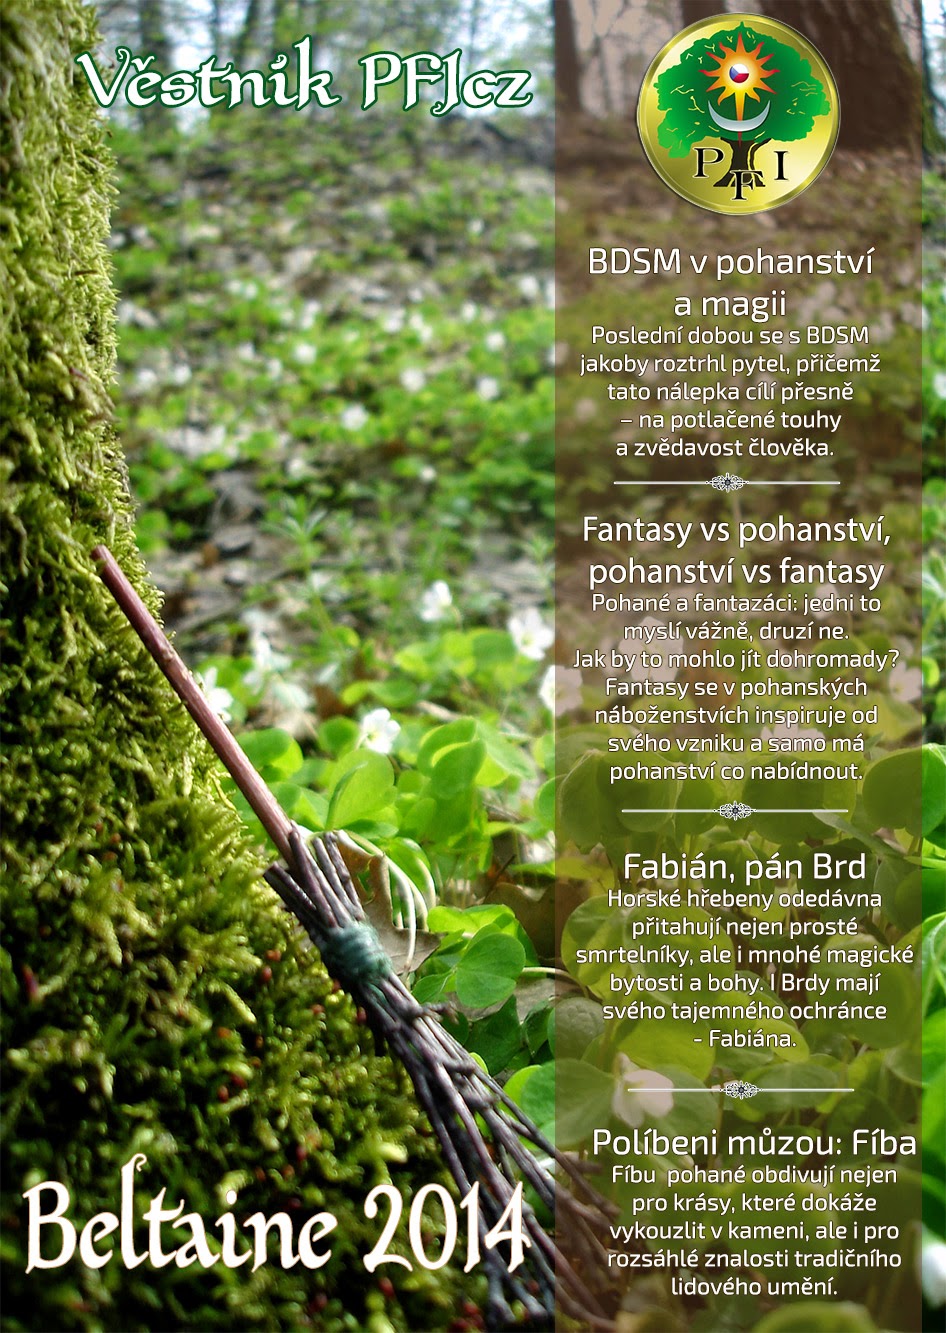 http://www.pohanskafederace.cz/vestnik/vestnik-beltaine-2014.pdf